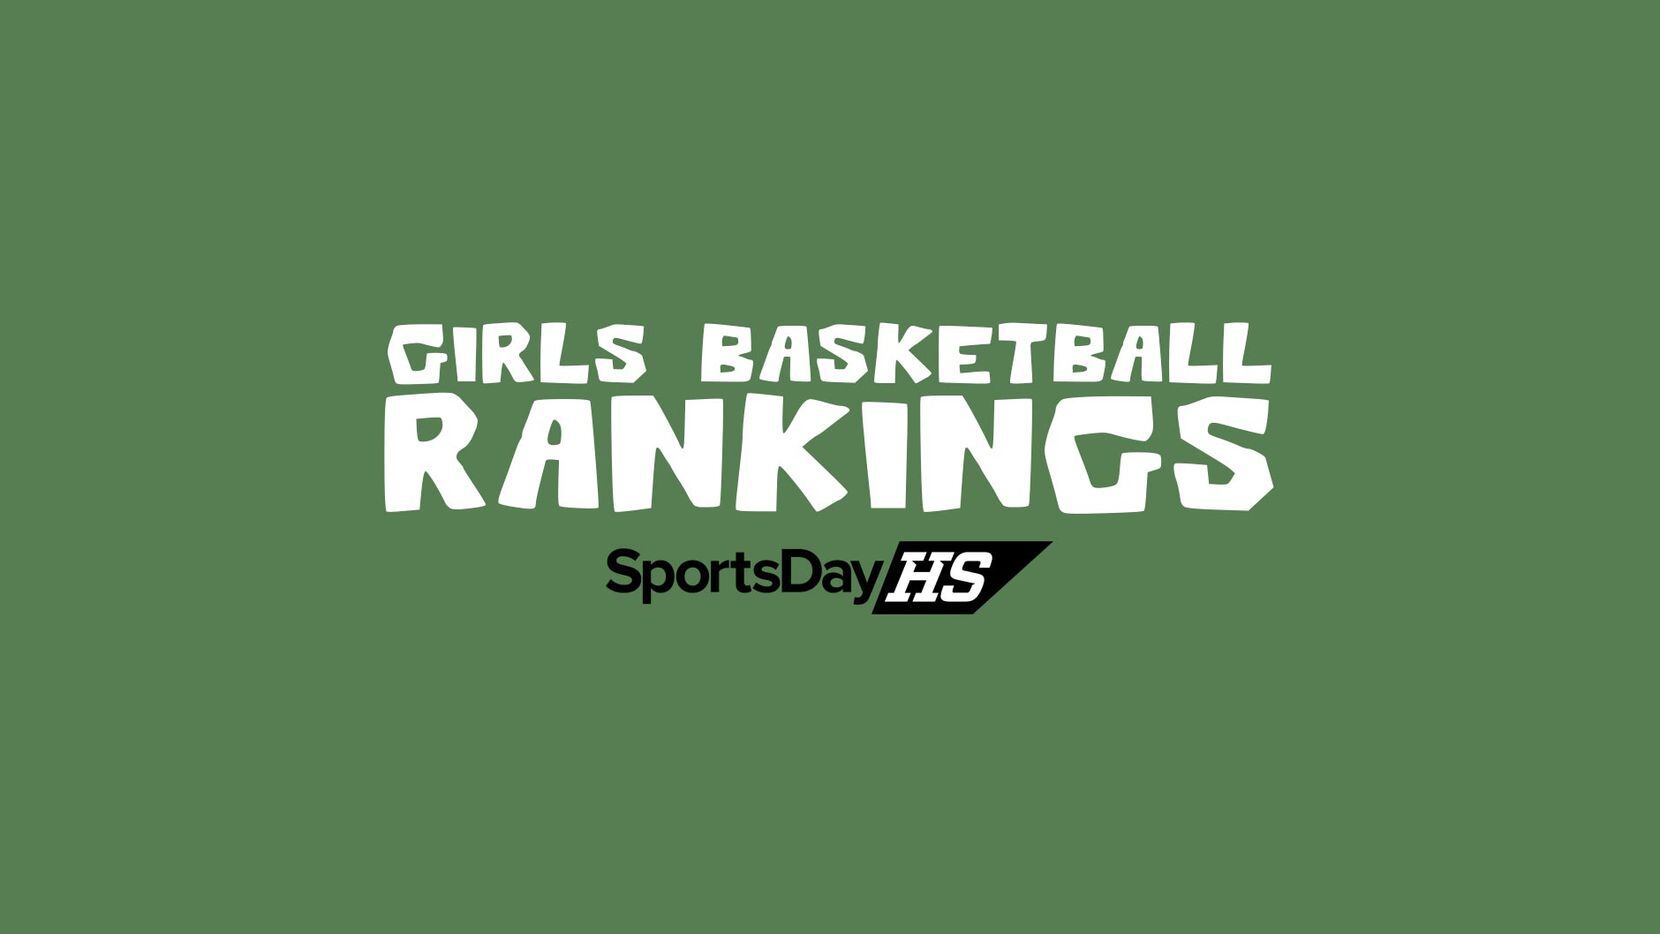 Girls basketball rankings.